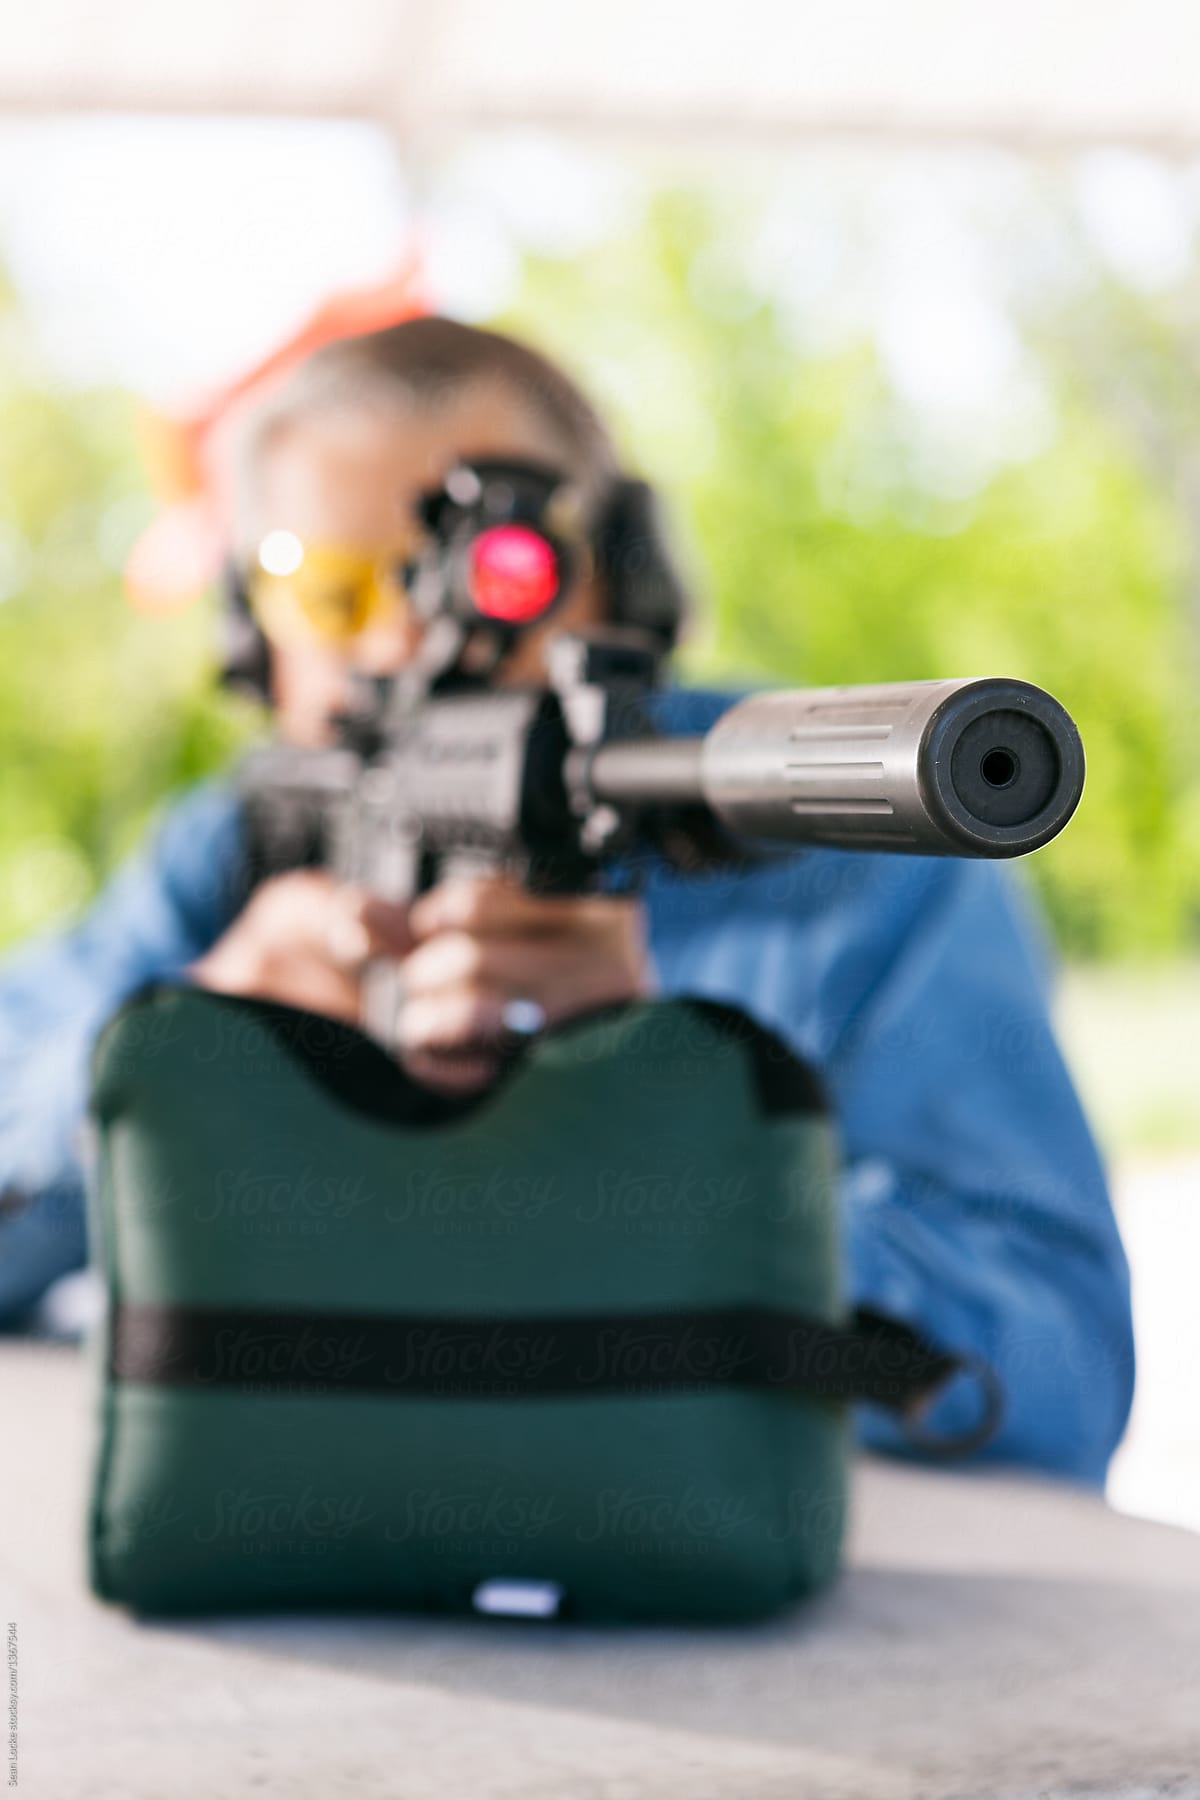 Shooting: Focus On Supressor On AR-15 Semi-Automatic Rifle